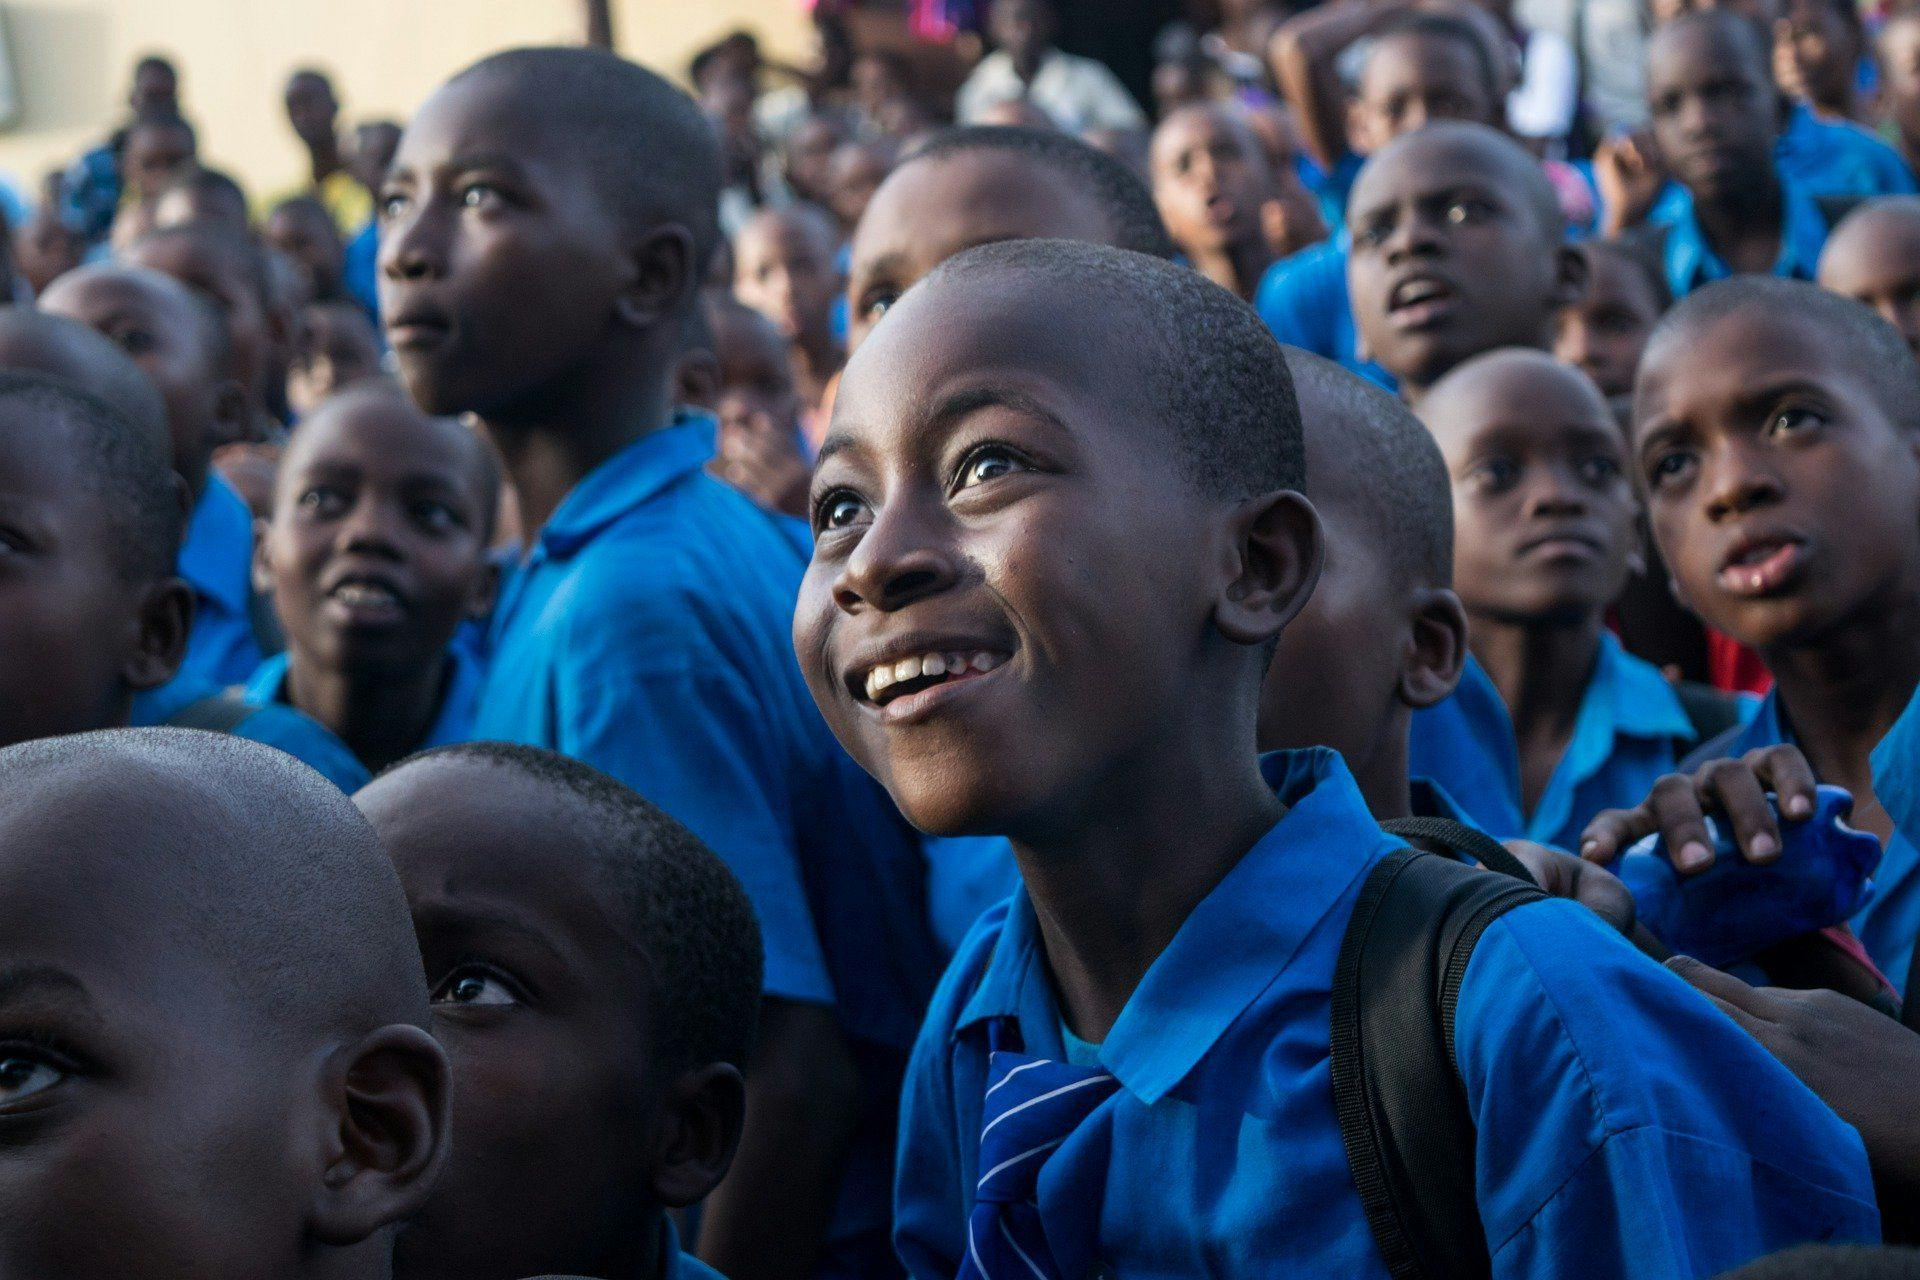 FTIS сделал крупное пожертвование SOS Villages d»Enfants Monde